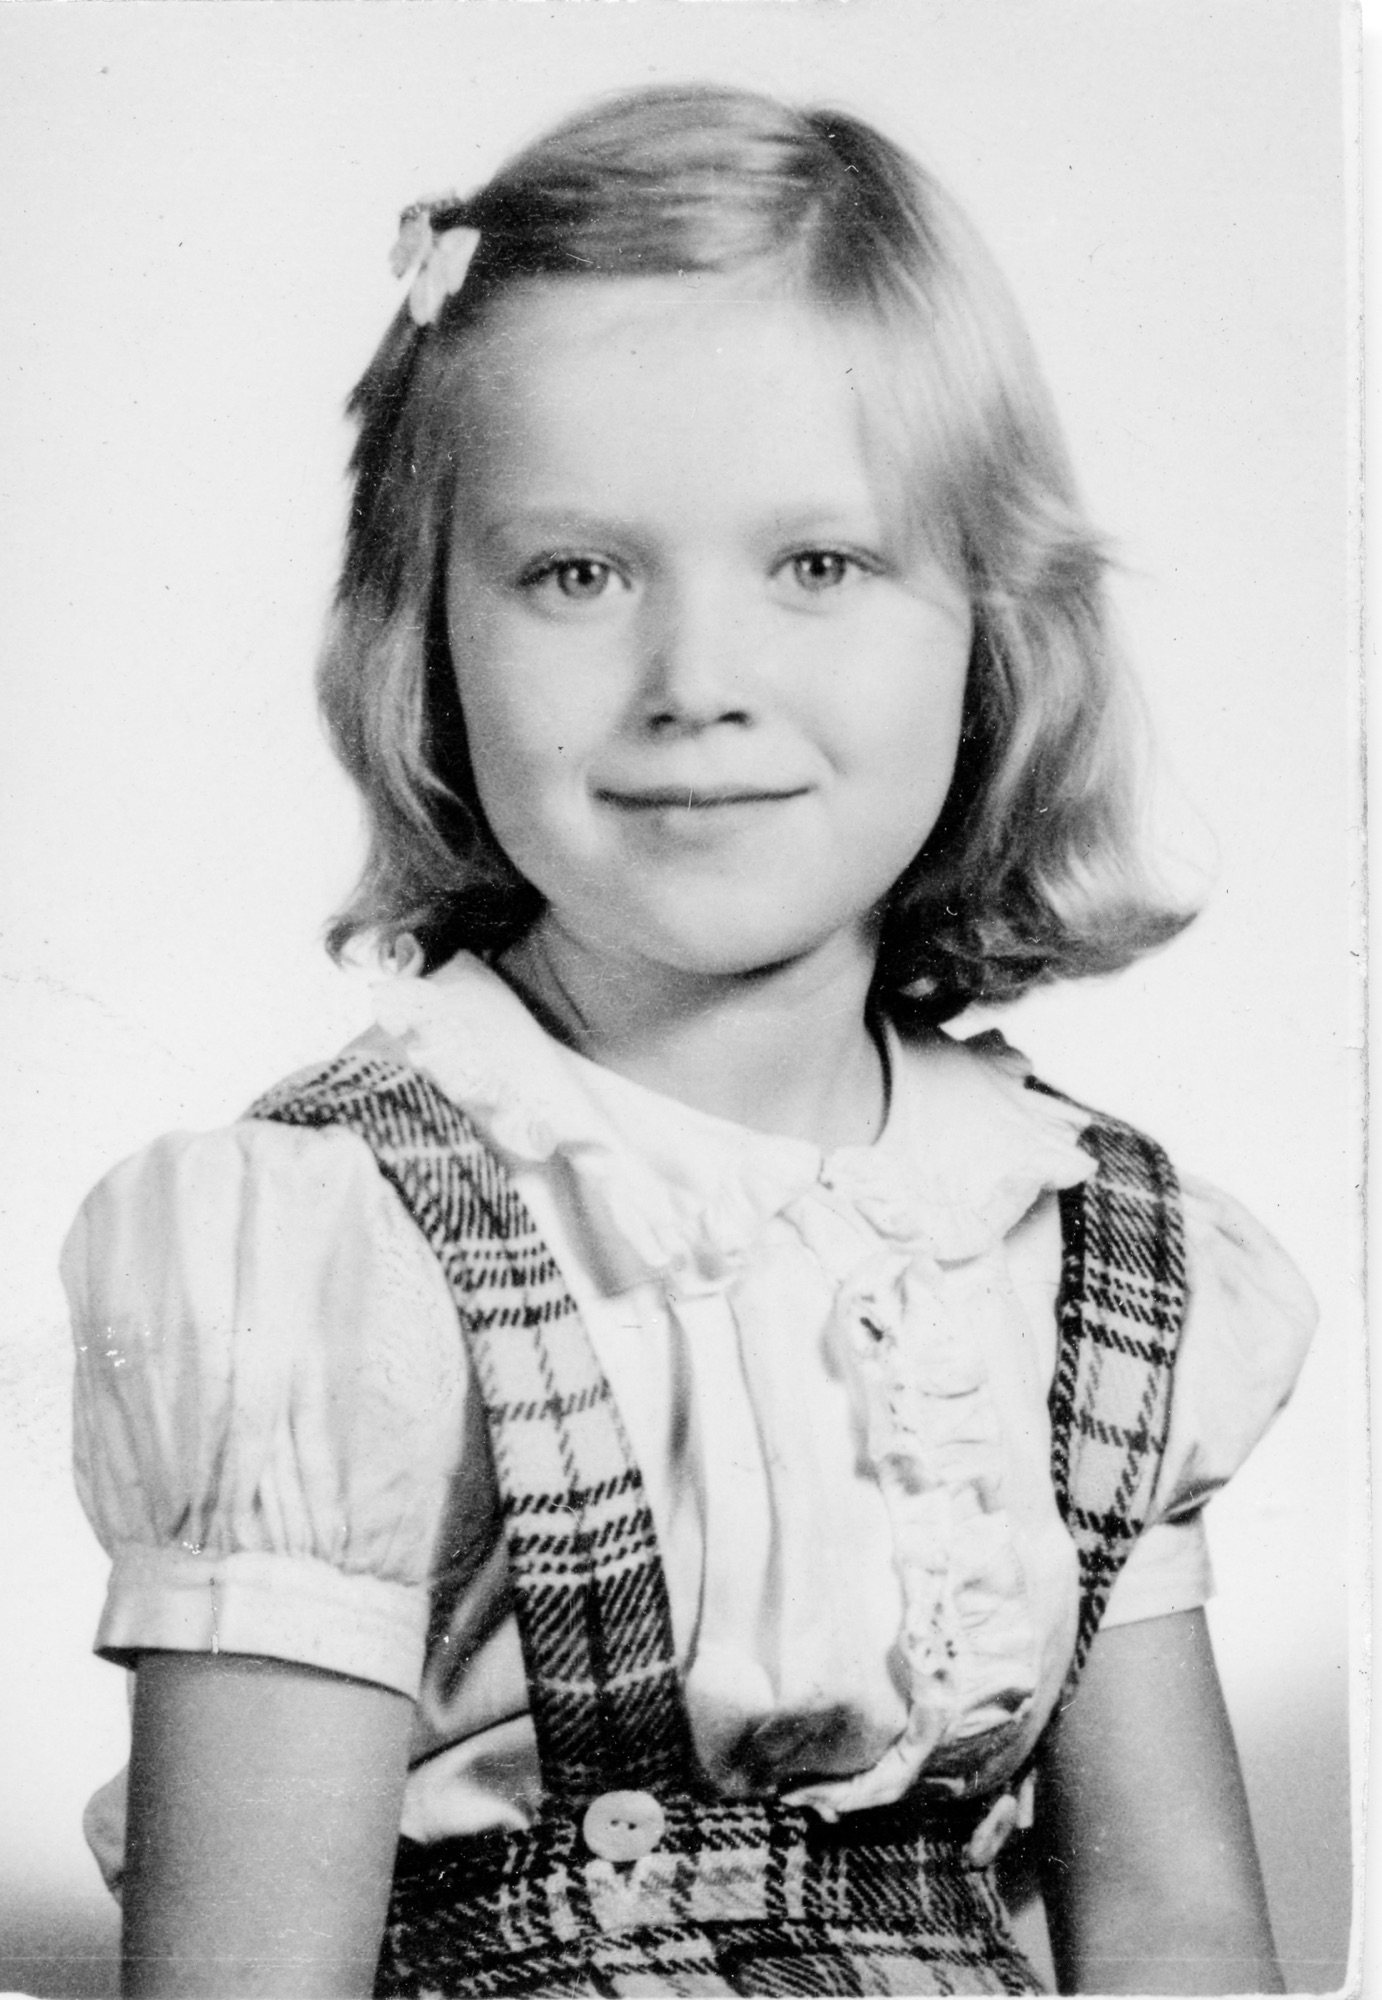 Little girl's school photo